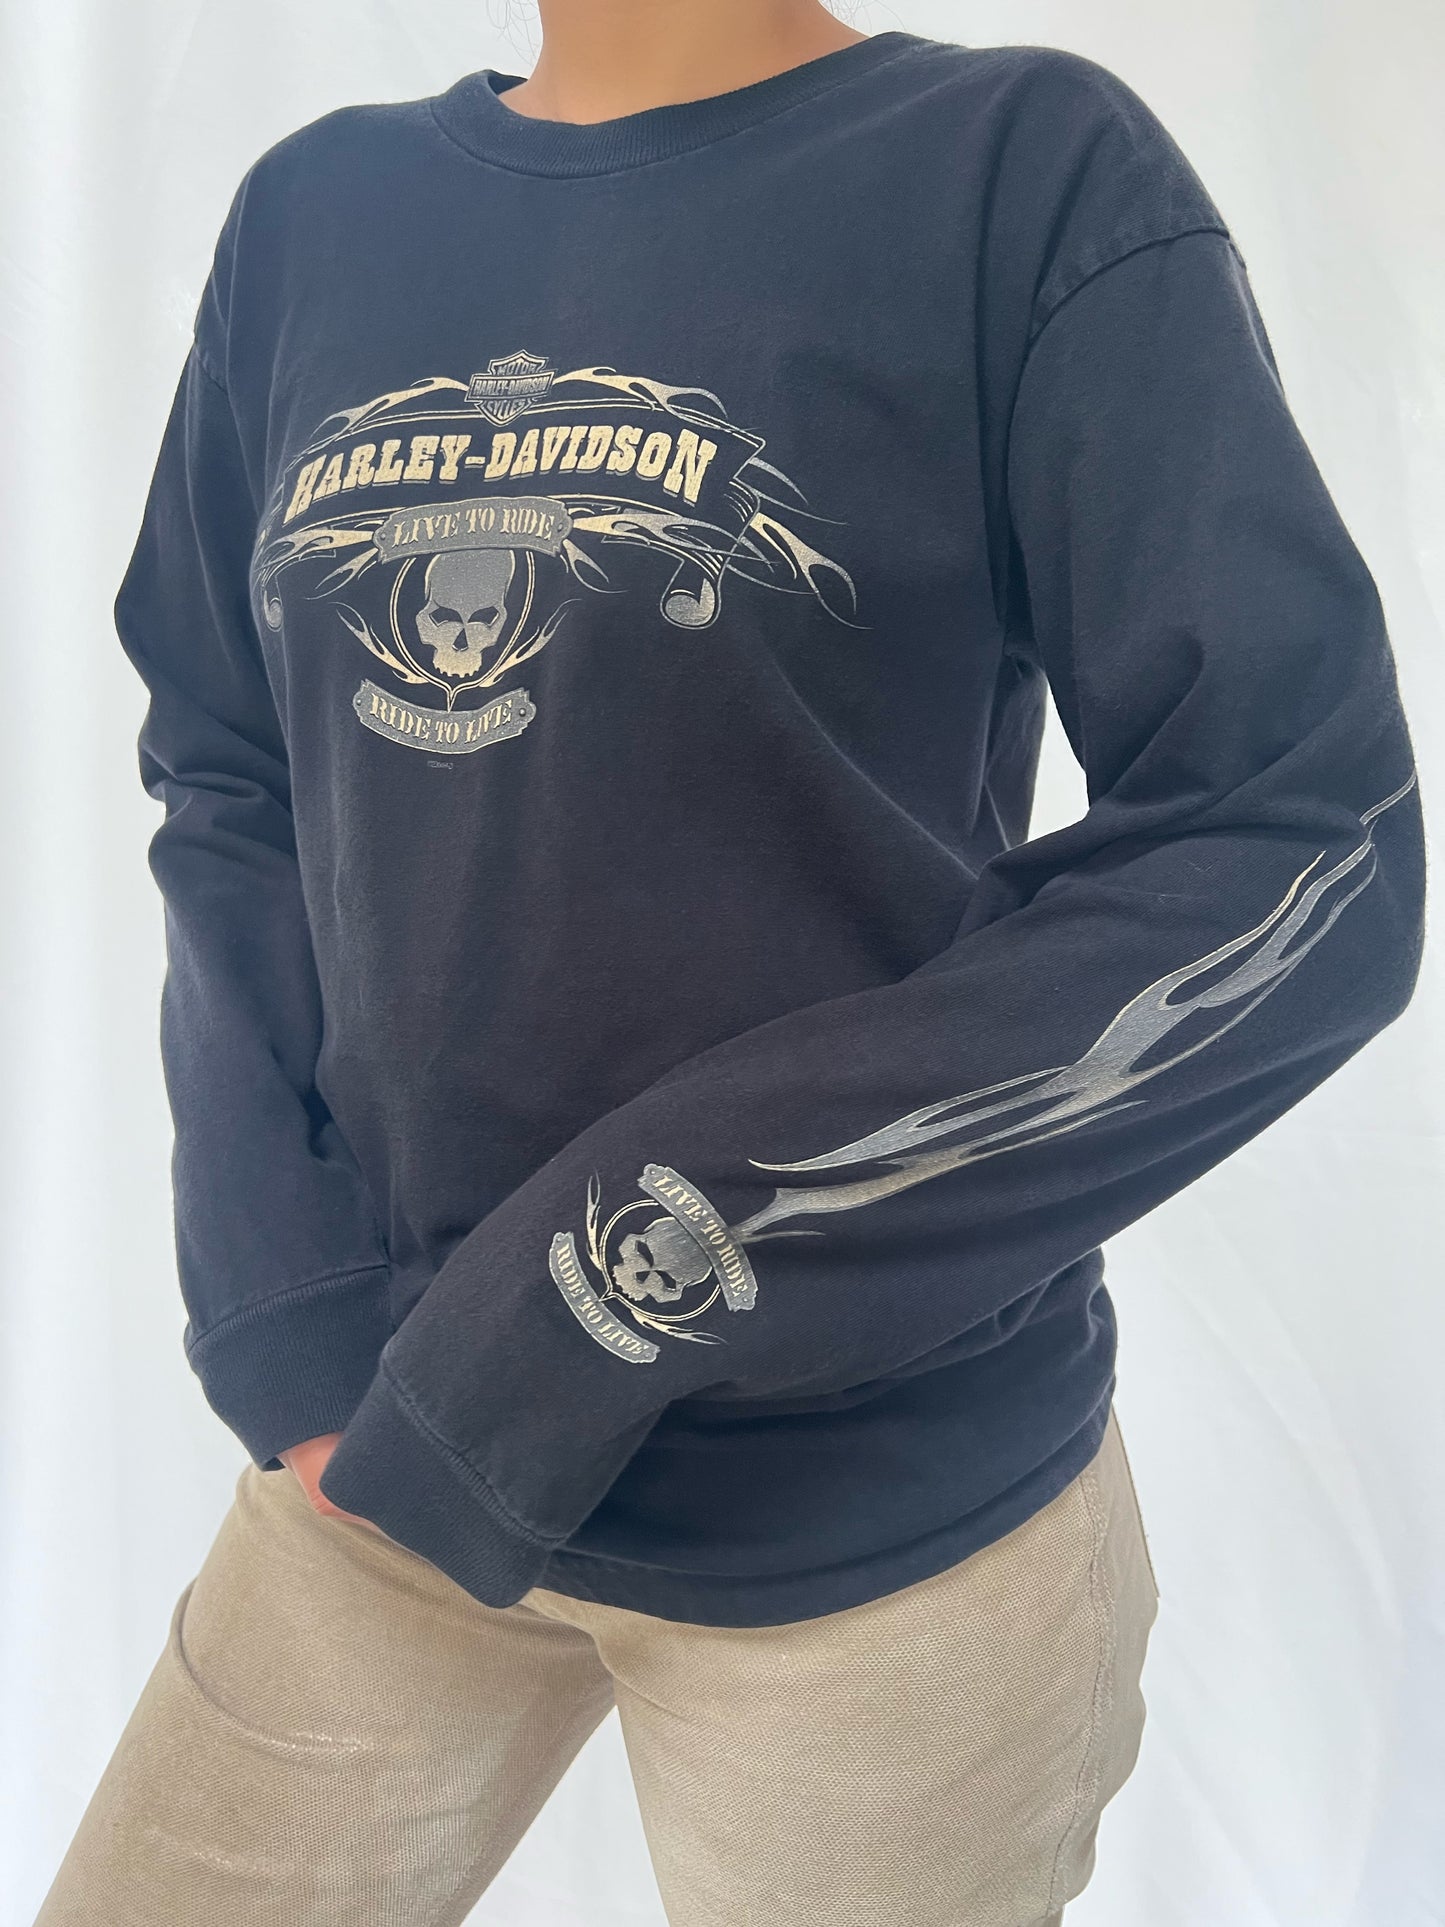 Harley Davidson Bahamas Long Sleeve - M